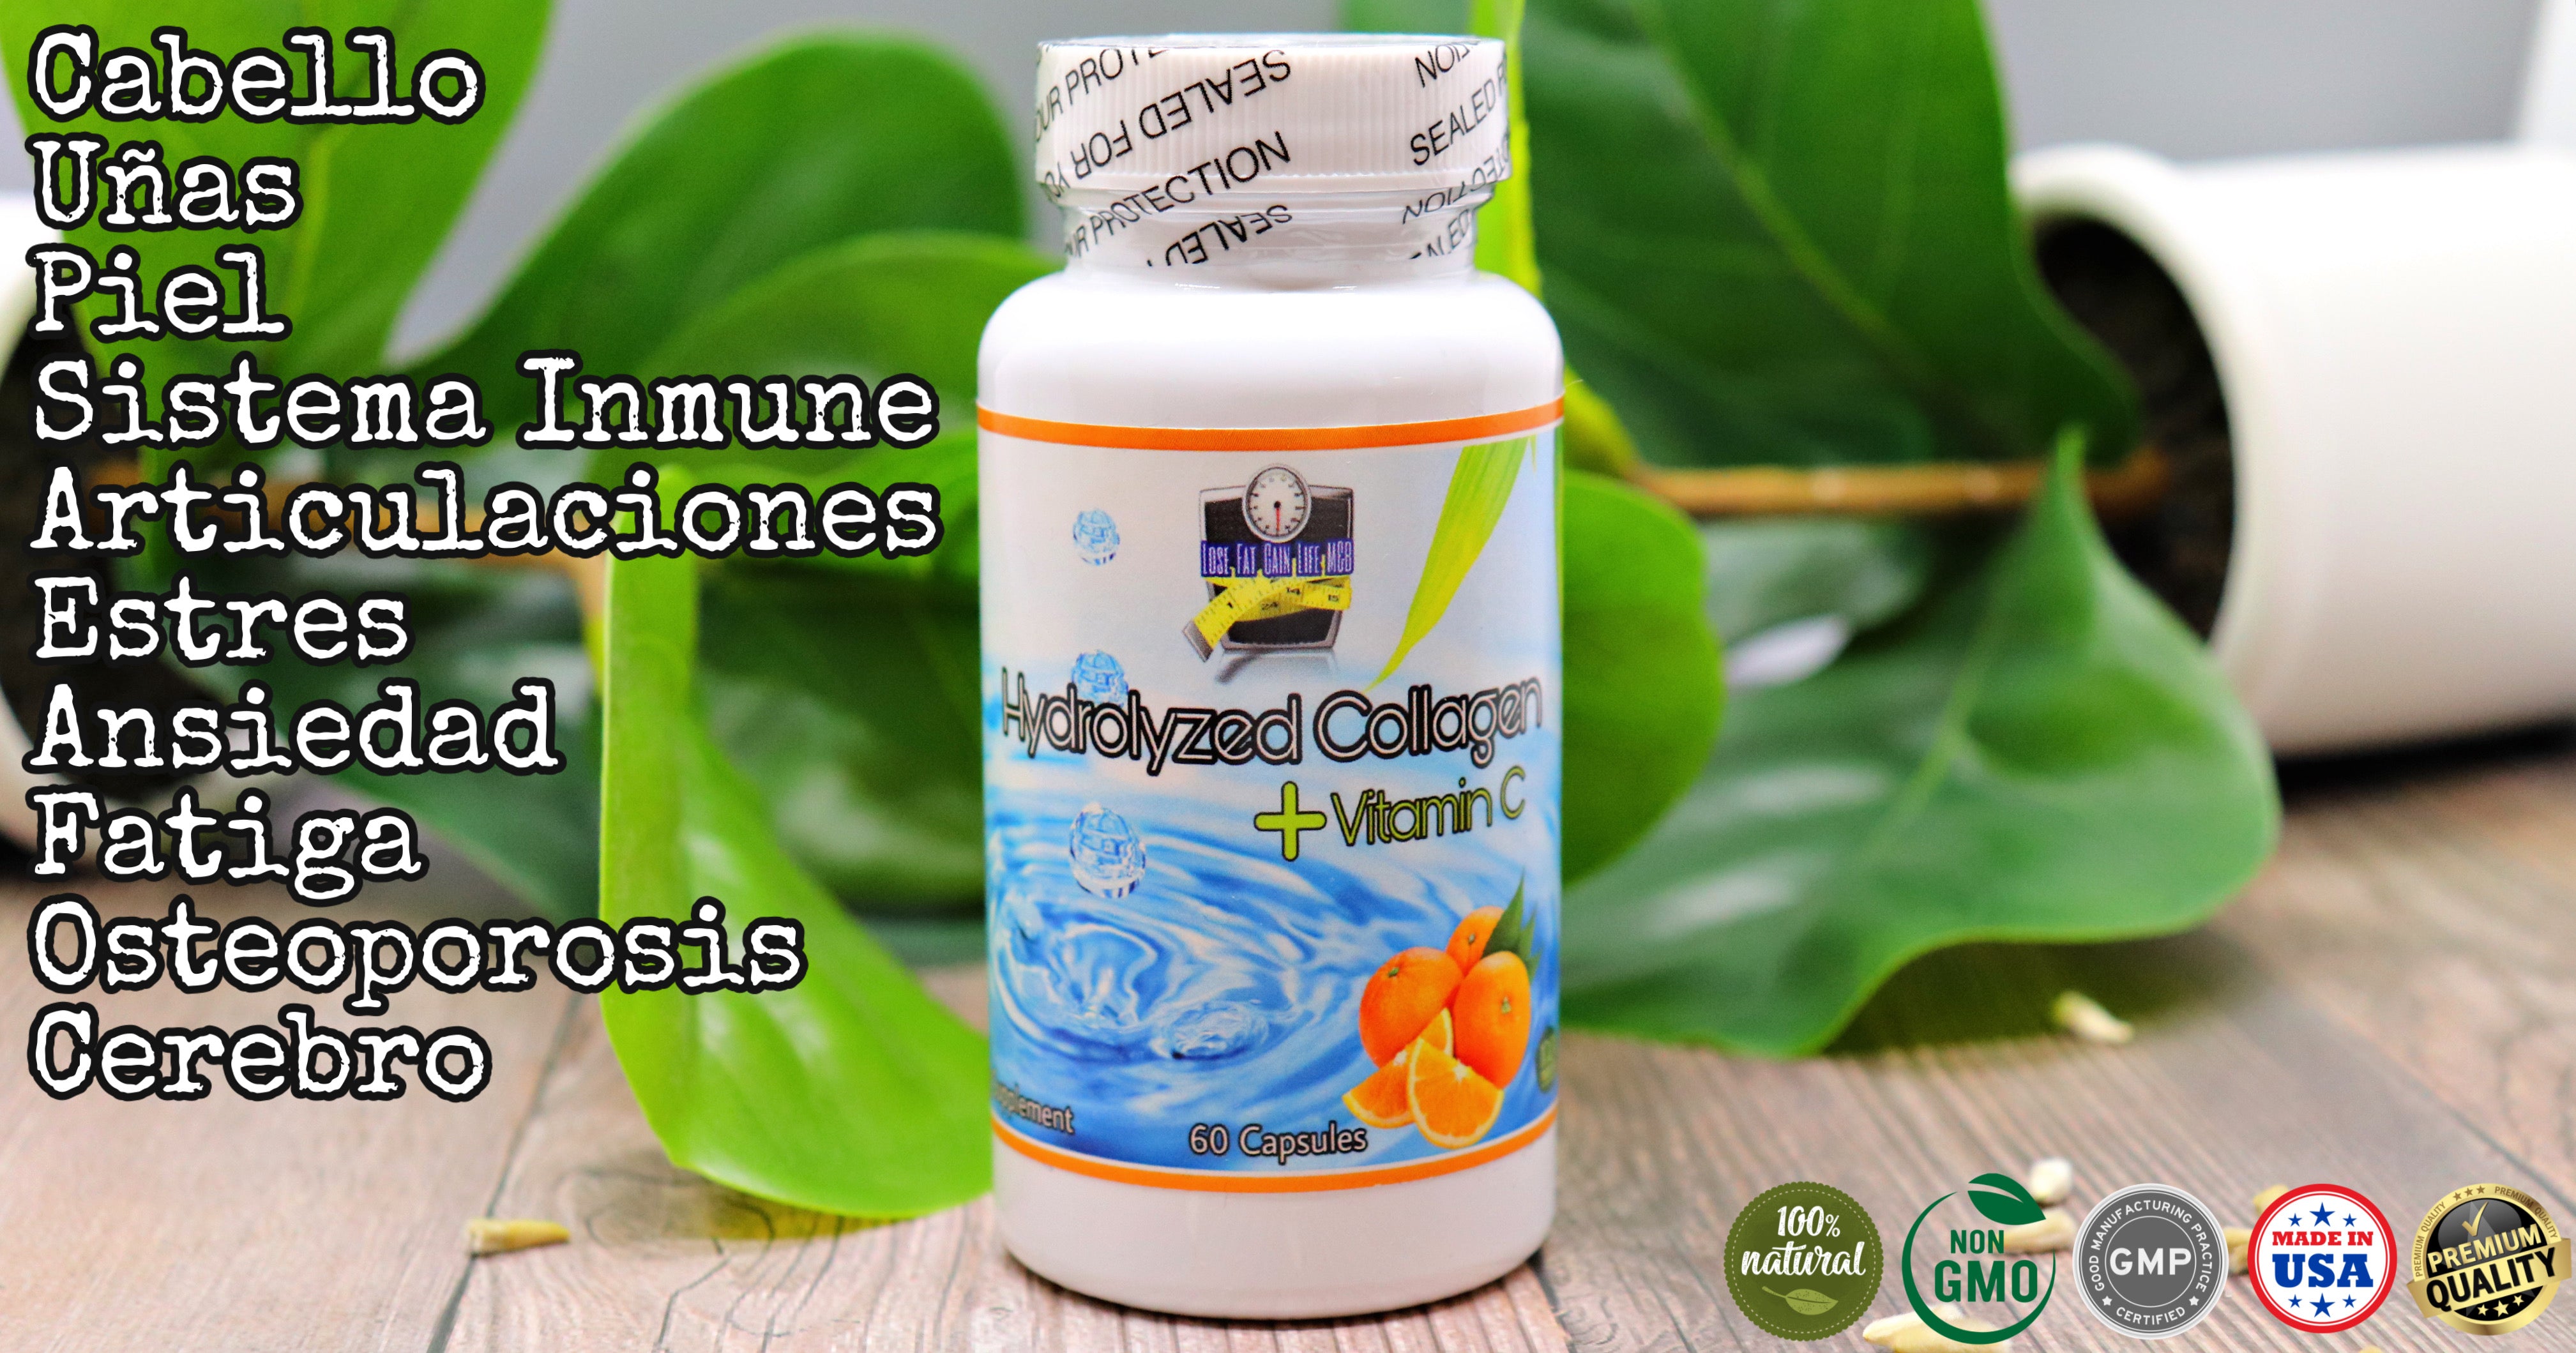 Hydrolyzed Collagen + Vitamin C